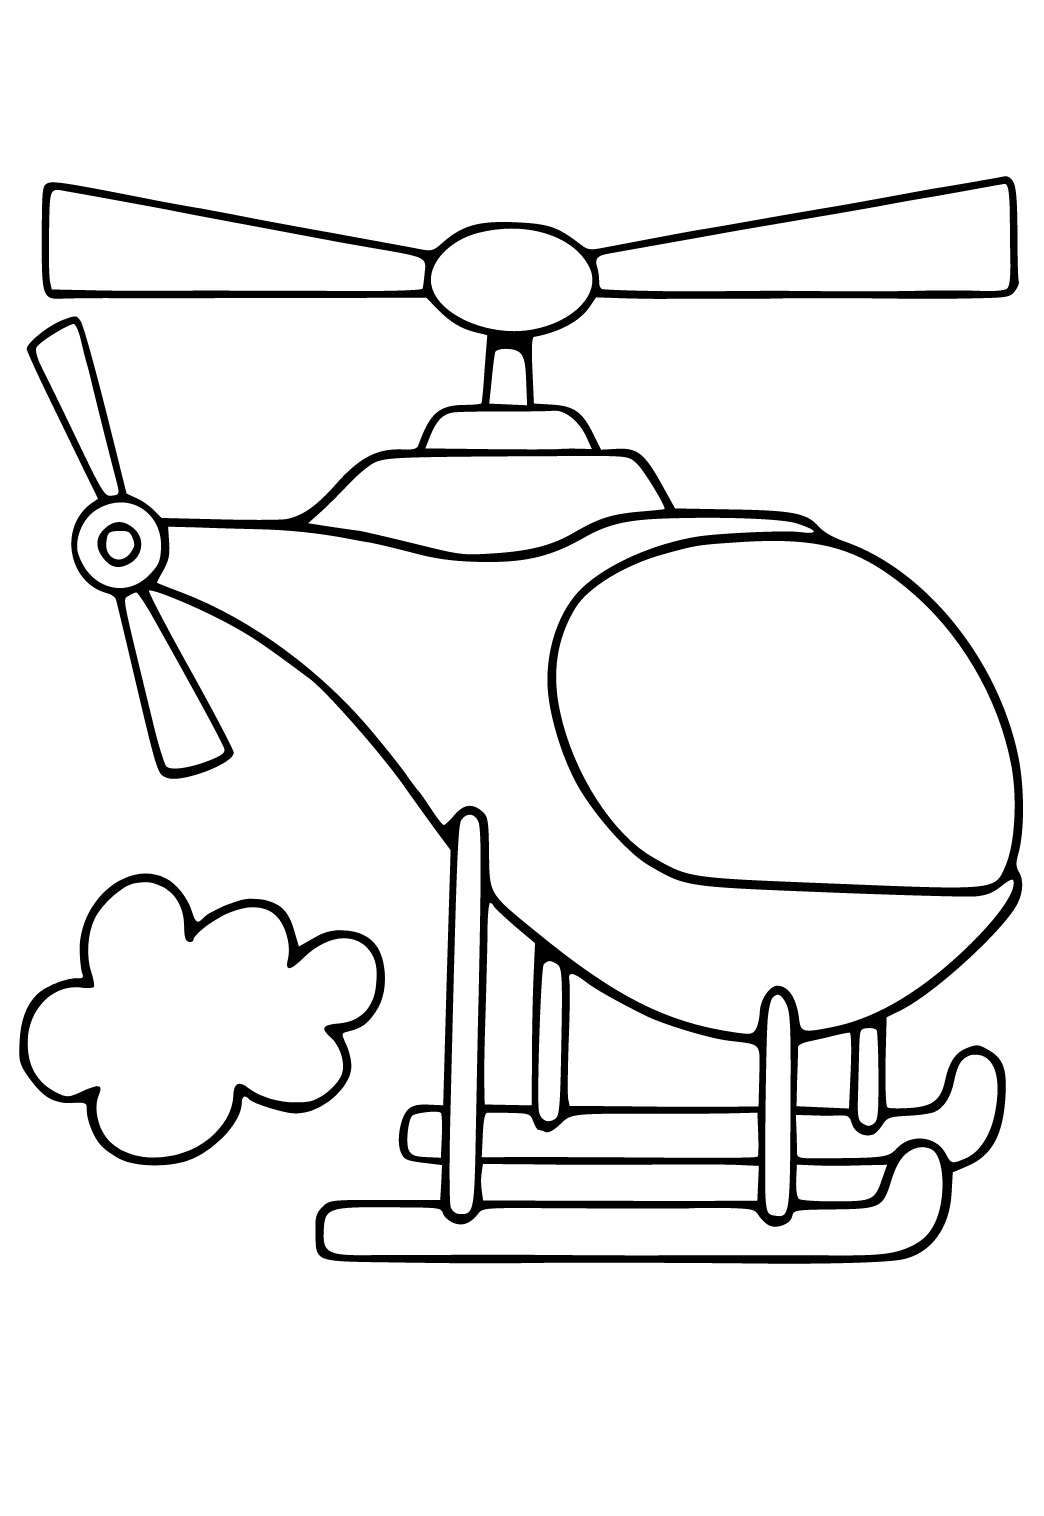 Elicottero